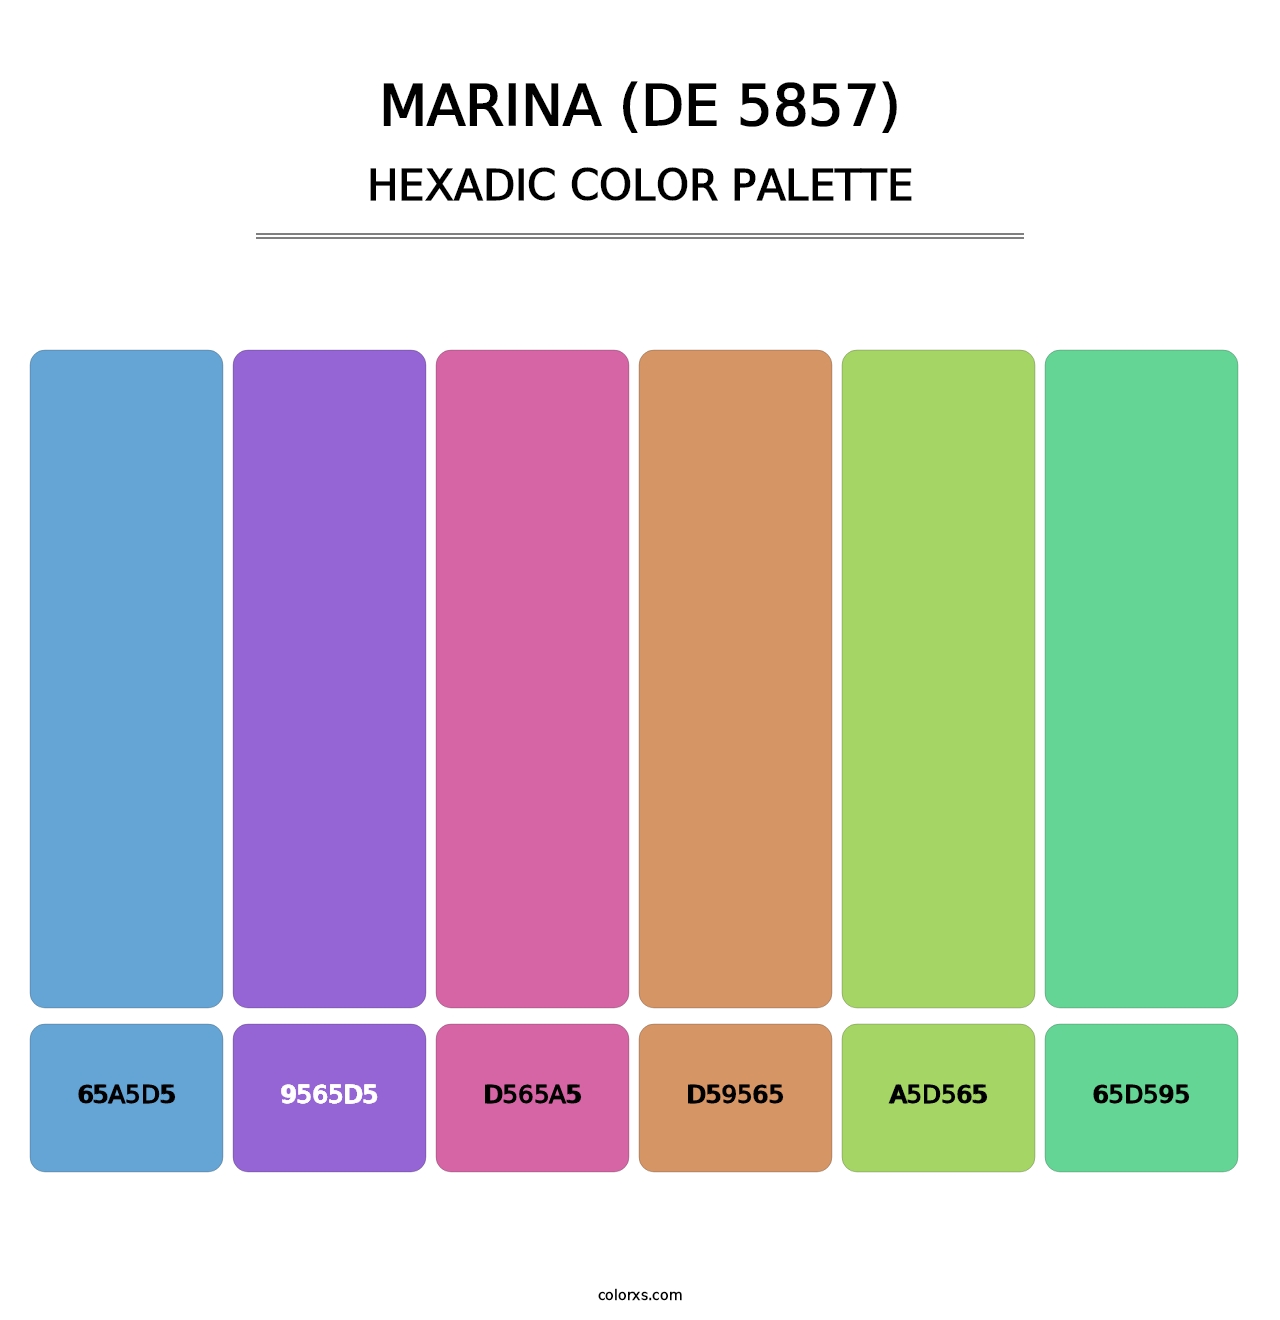 Marina (DE 5857) - Hexadic Color Palette